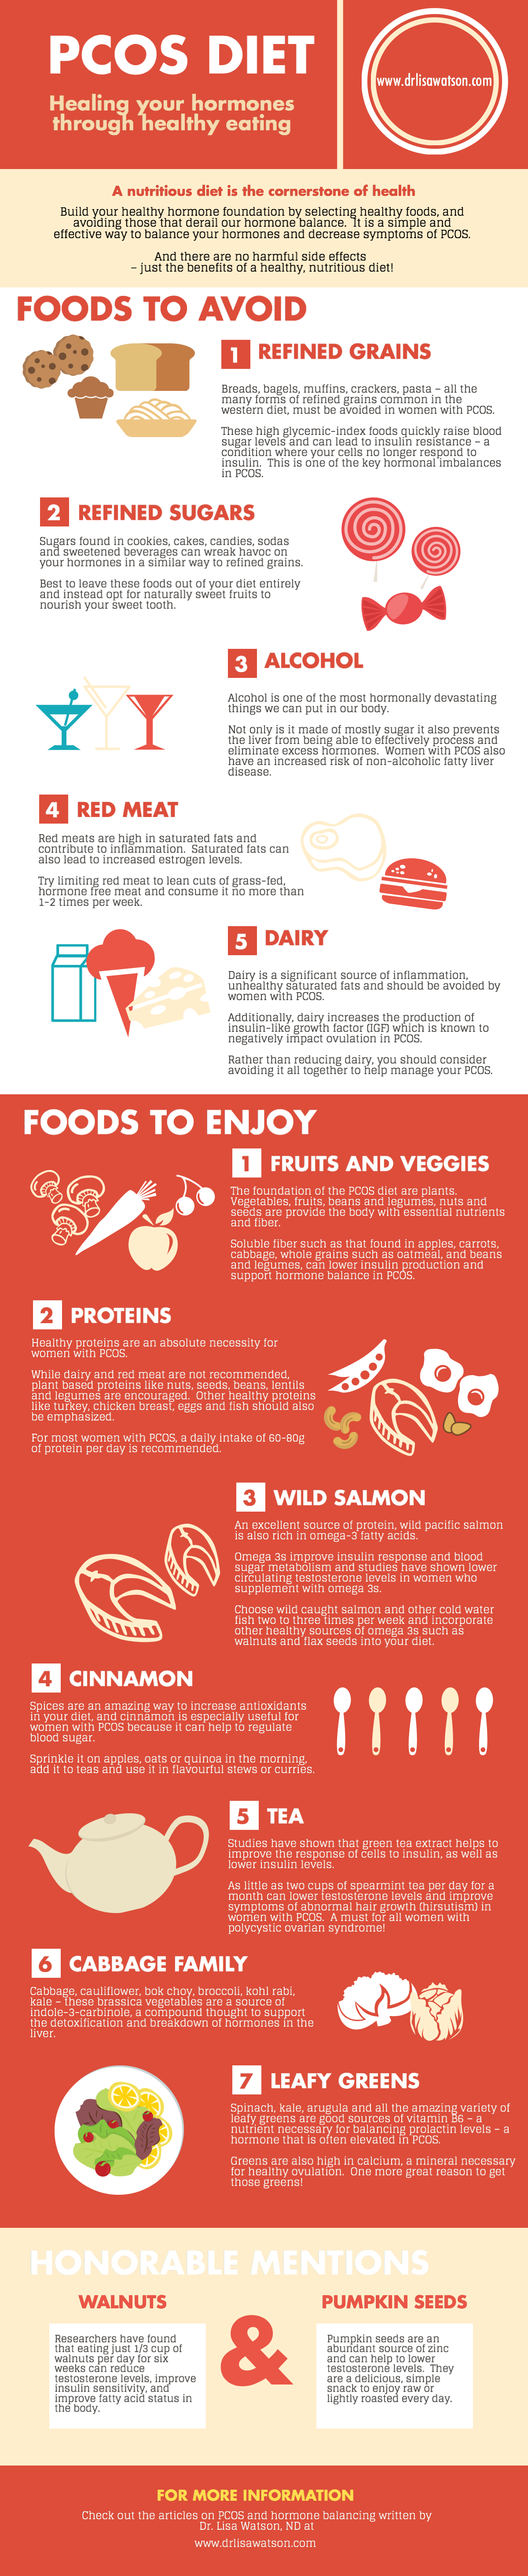 Gambar Infografis: Diet PCOS